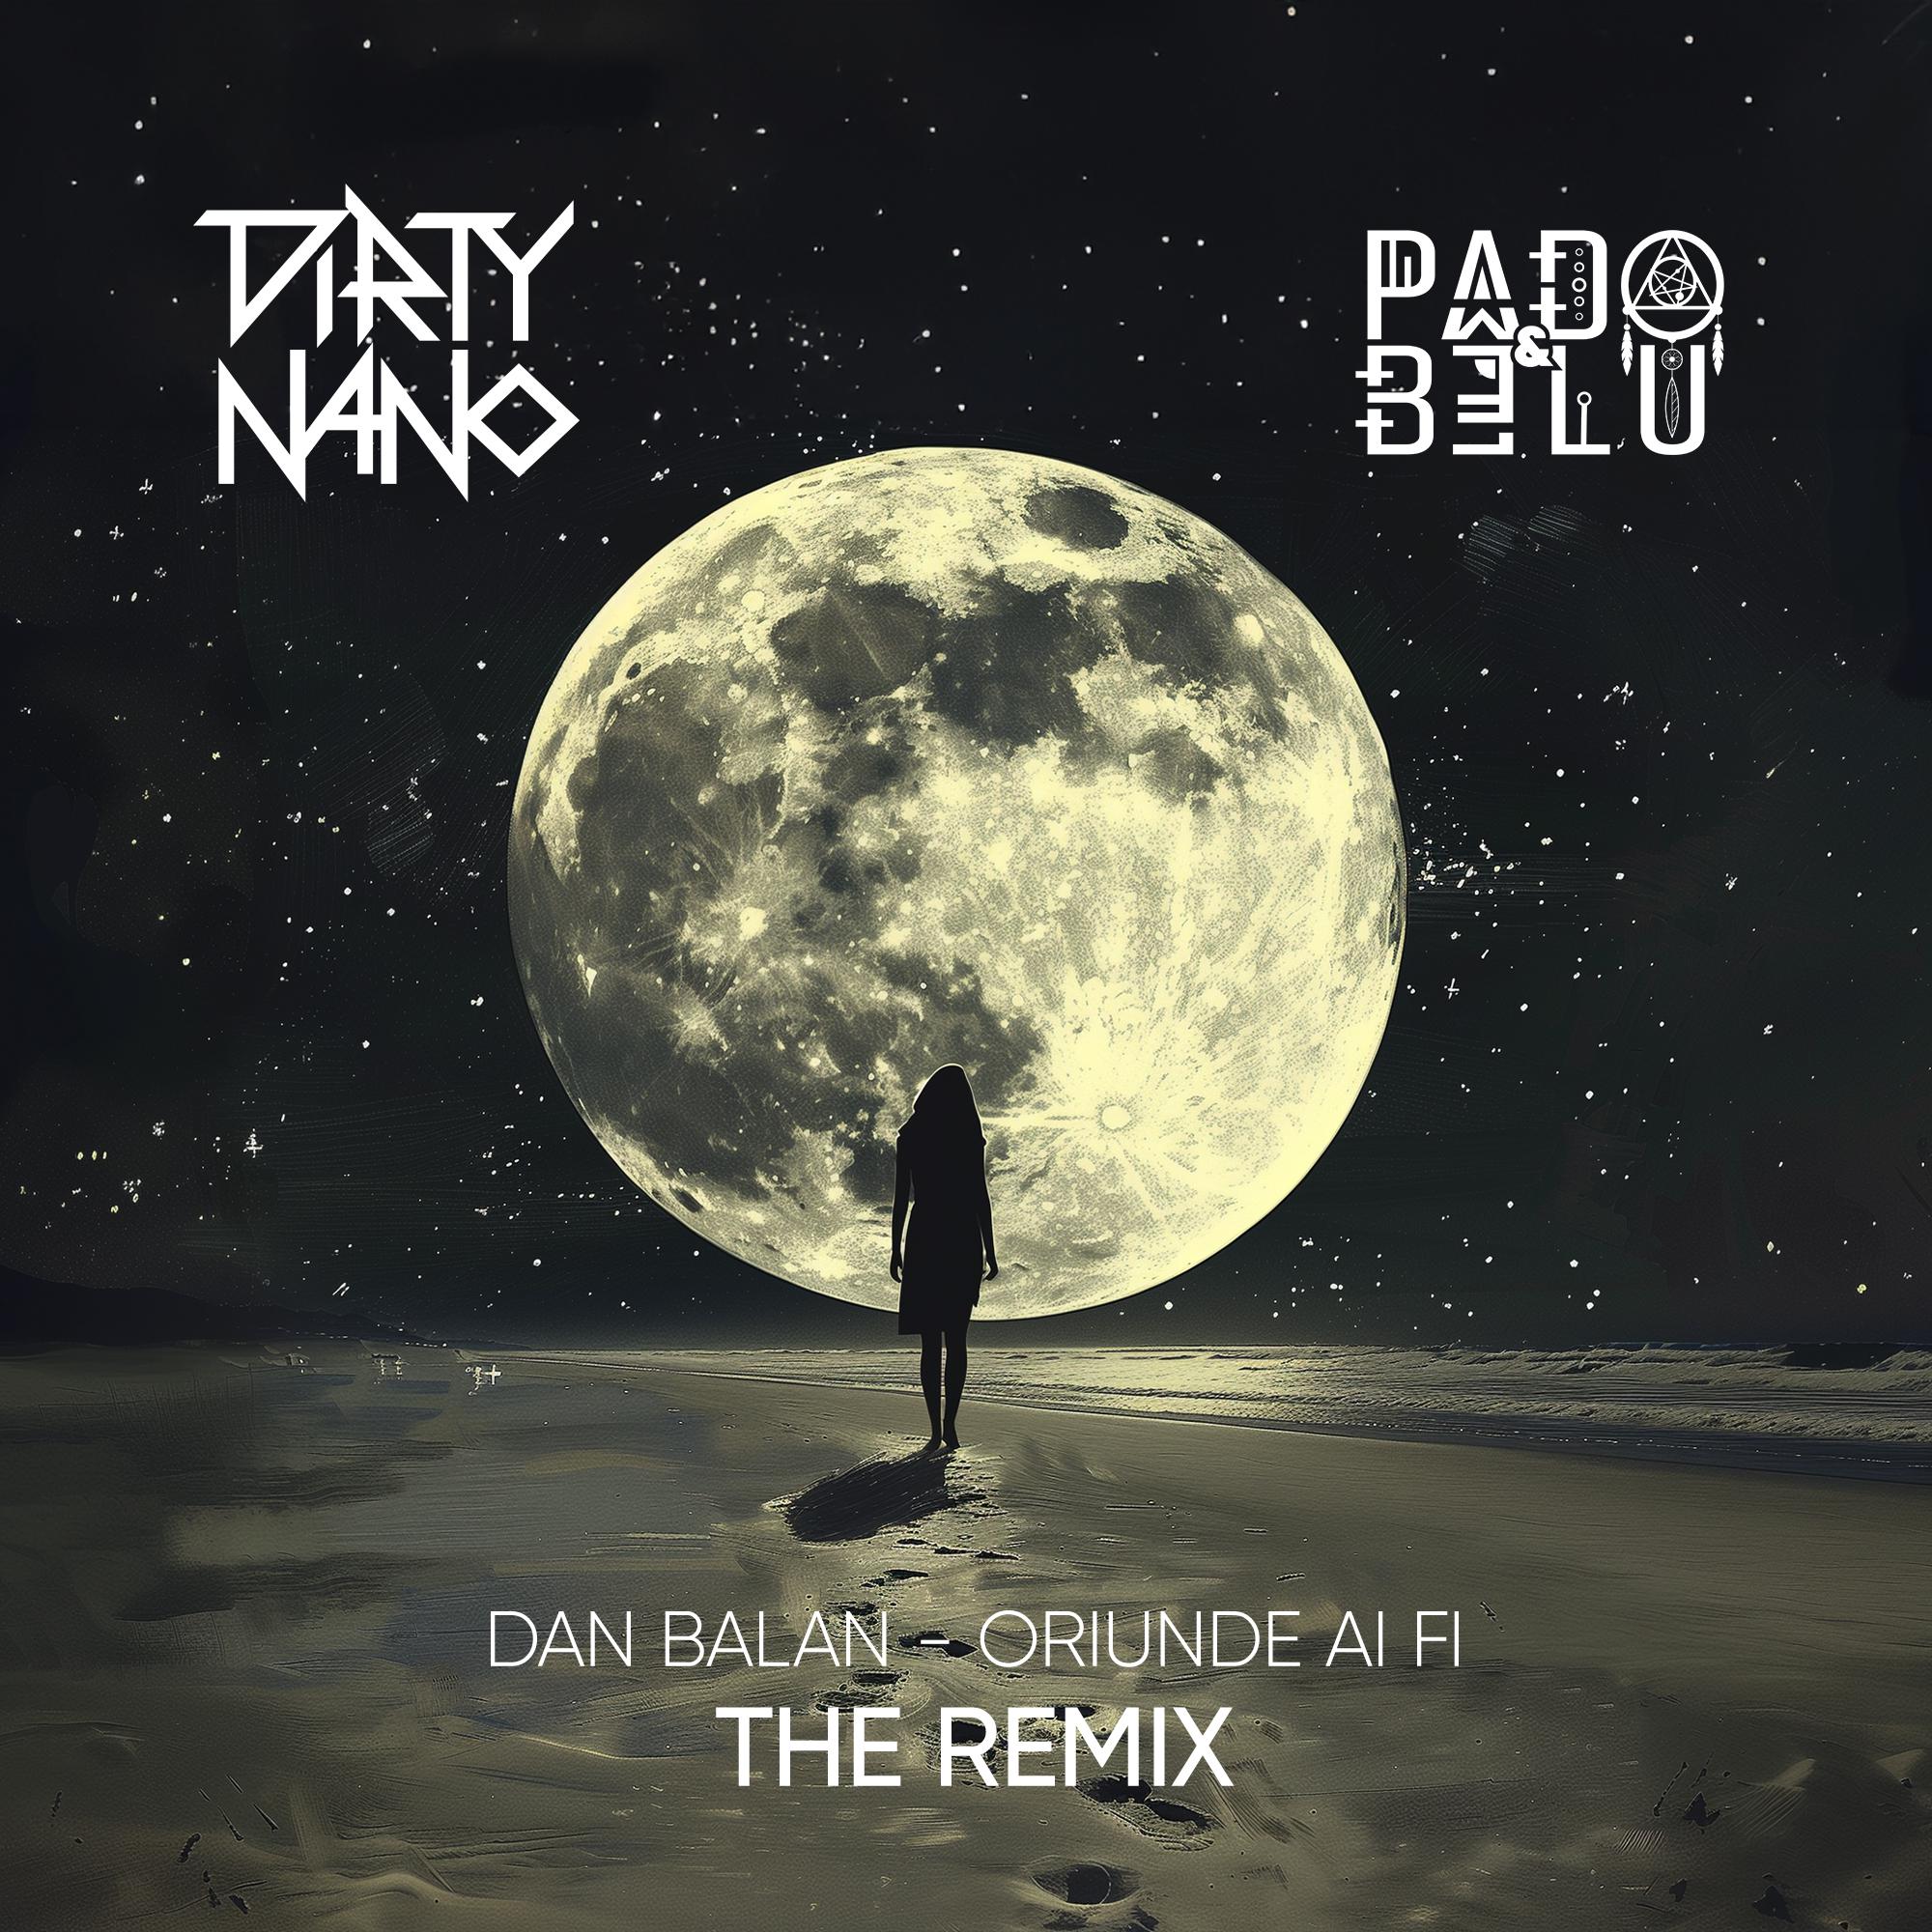 Dirty Nano - Oriunde ai fi (The Remix)